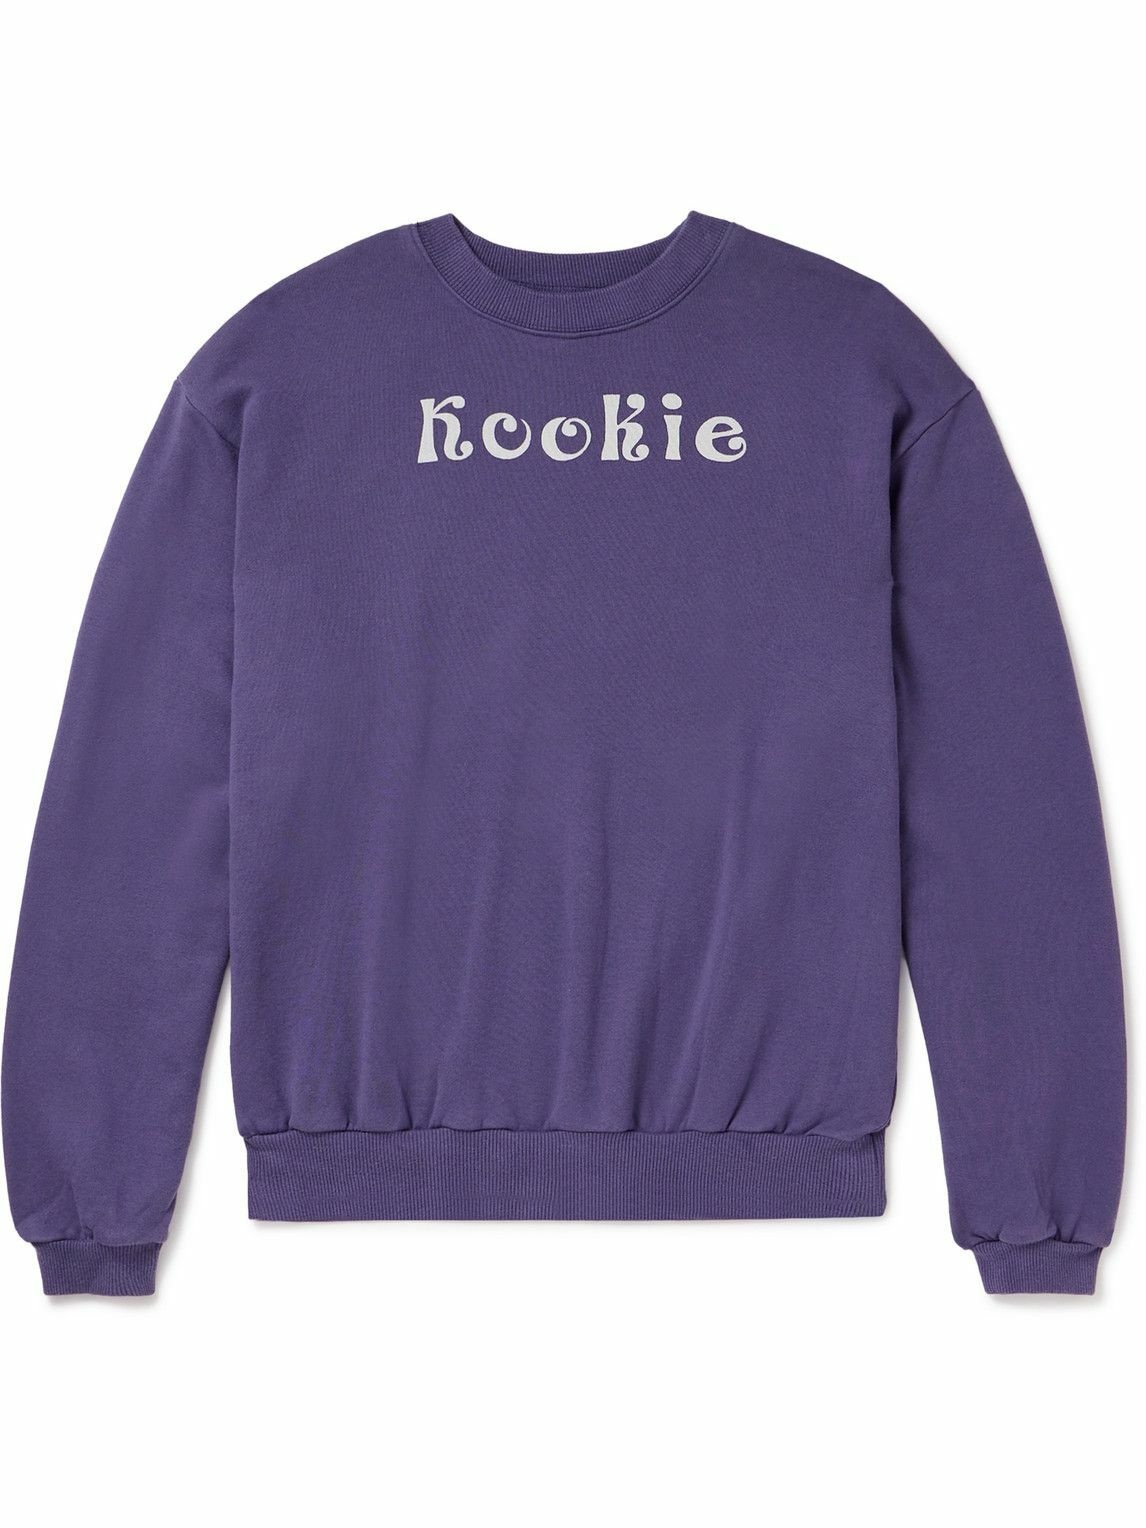 Photo: KAPITAL - Kookie Printed Cotton-Jersey Sweatshirt - Purple